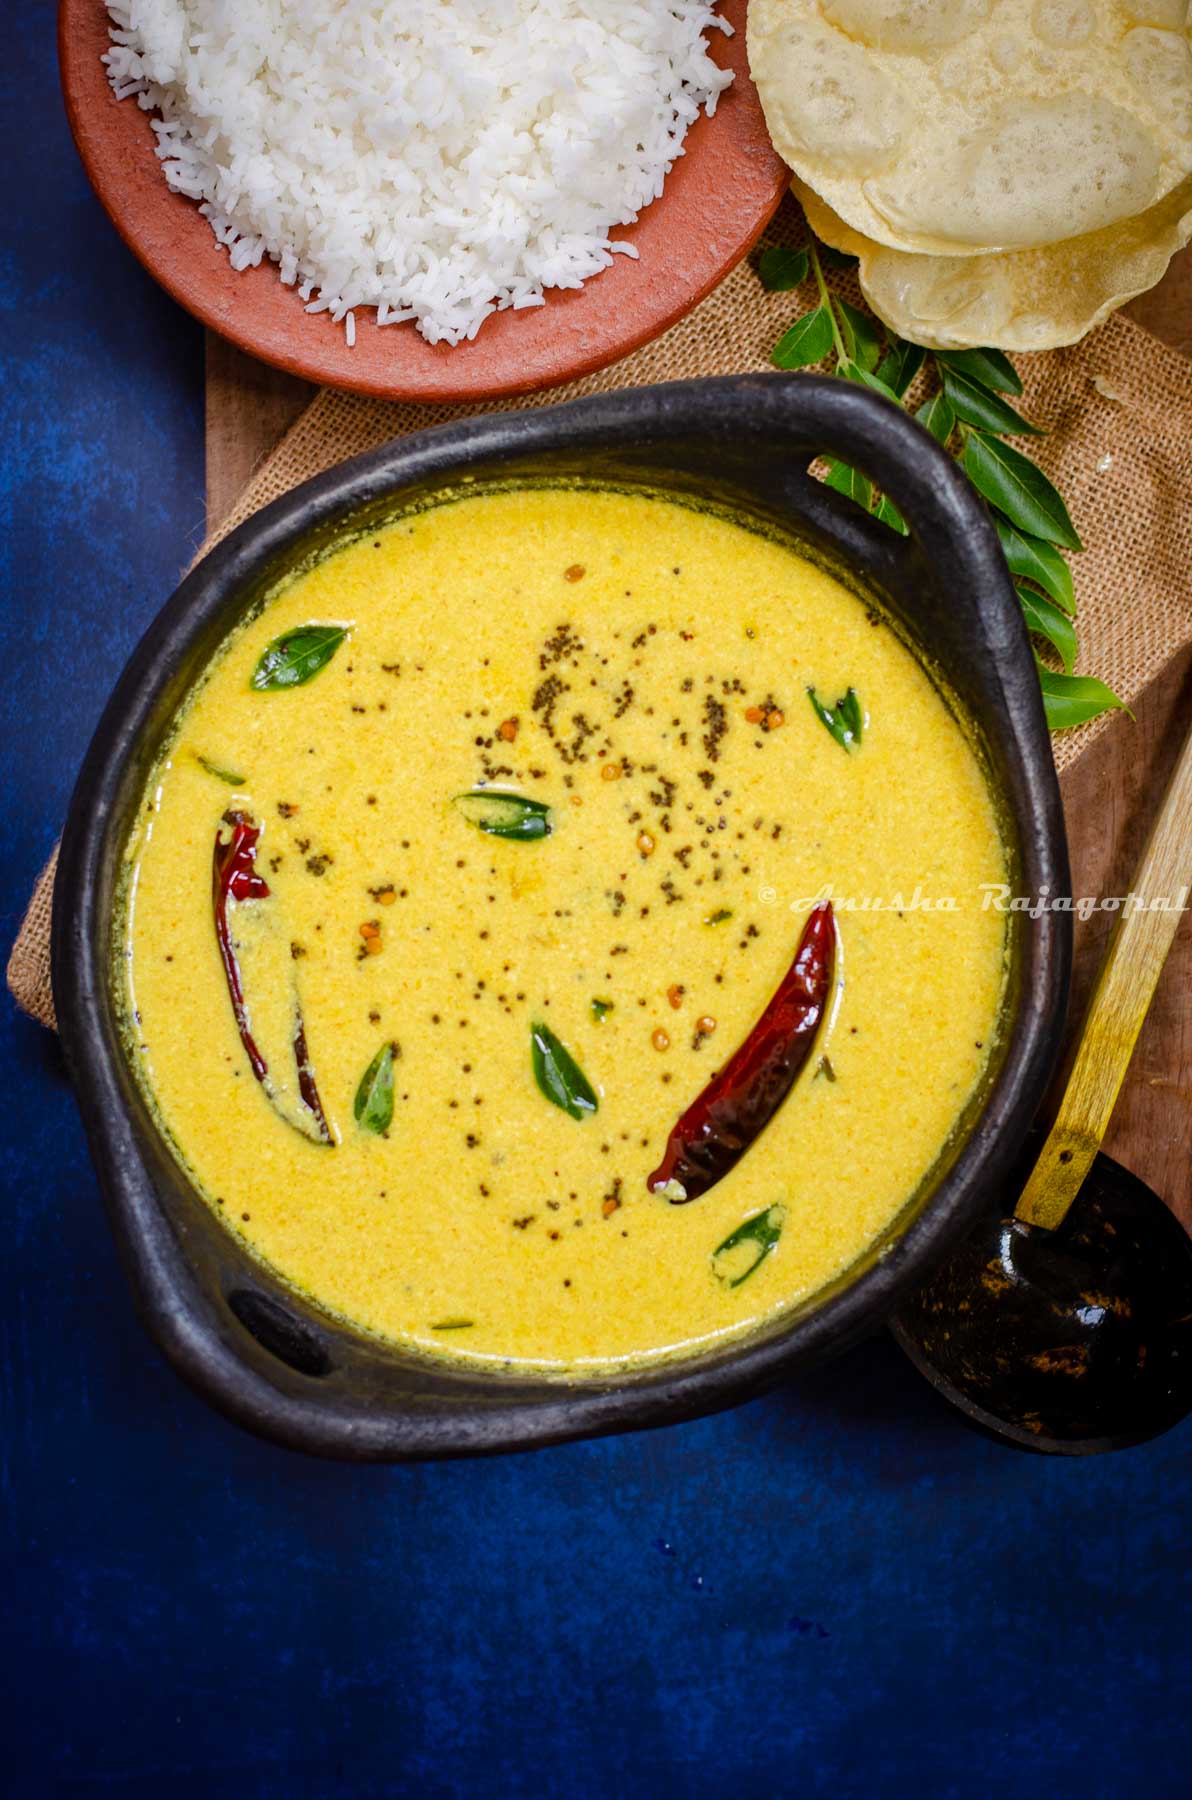 Mambazha Pulisseri- Kerala style mango curry in a yogurt base served in a blackened claypot. Served alongside steamed rice, poppadoms